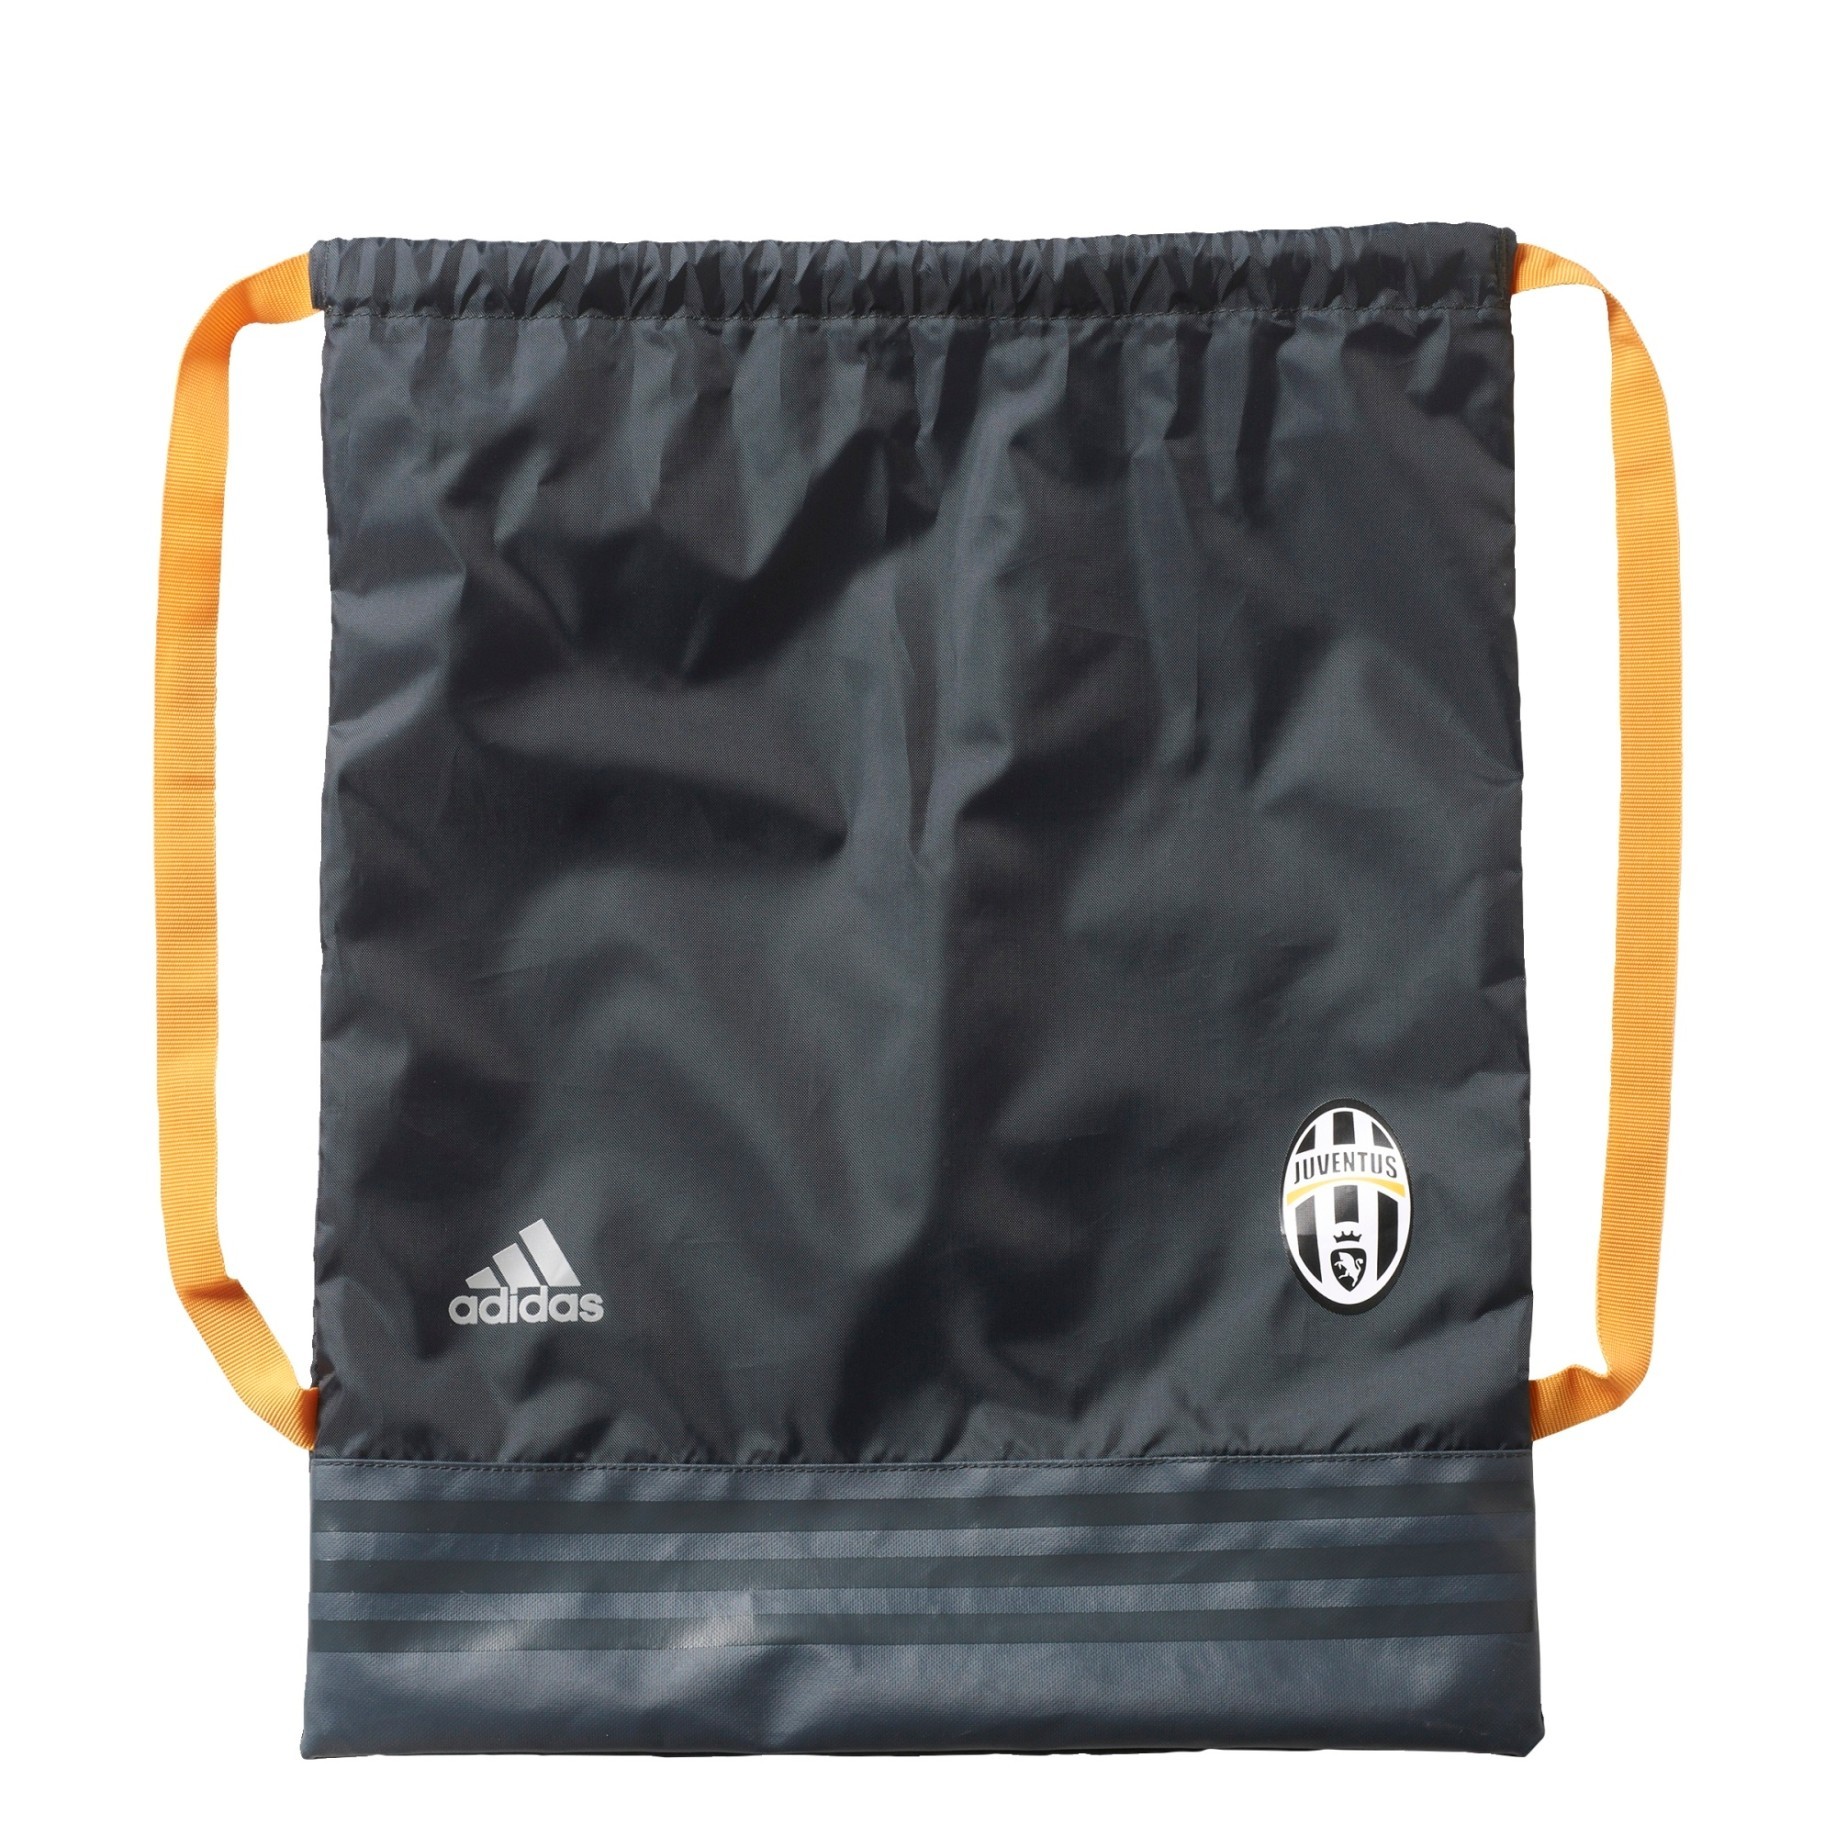 Sacca Juventus colore Nero Giallo - Adidas 